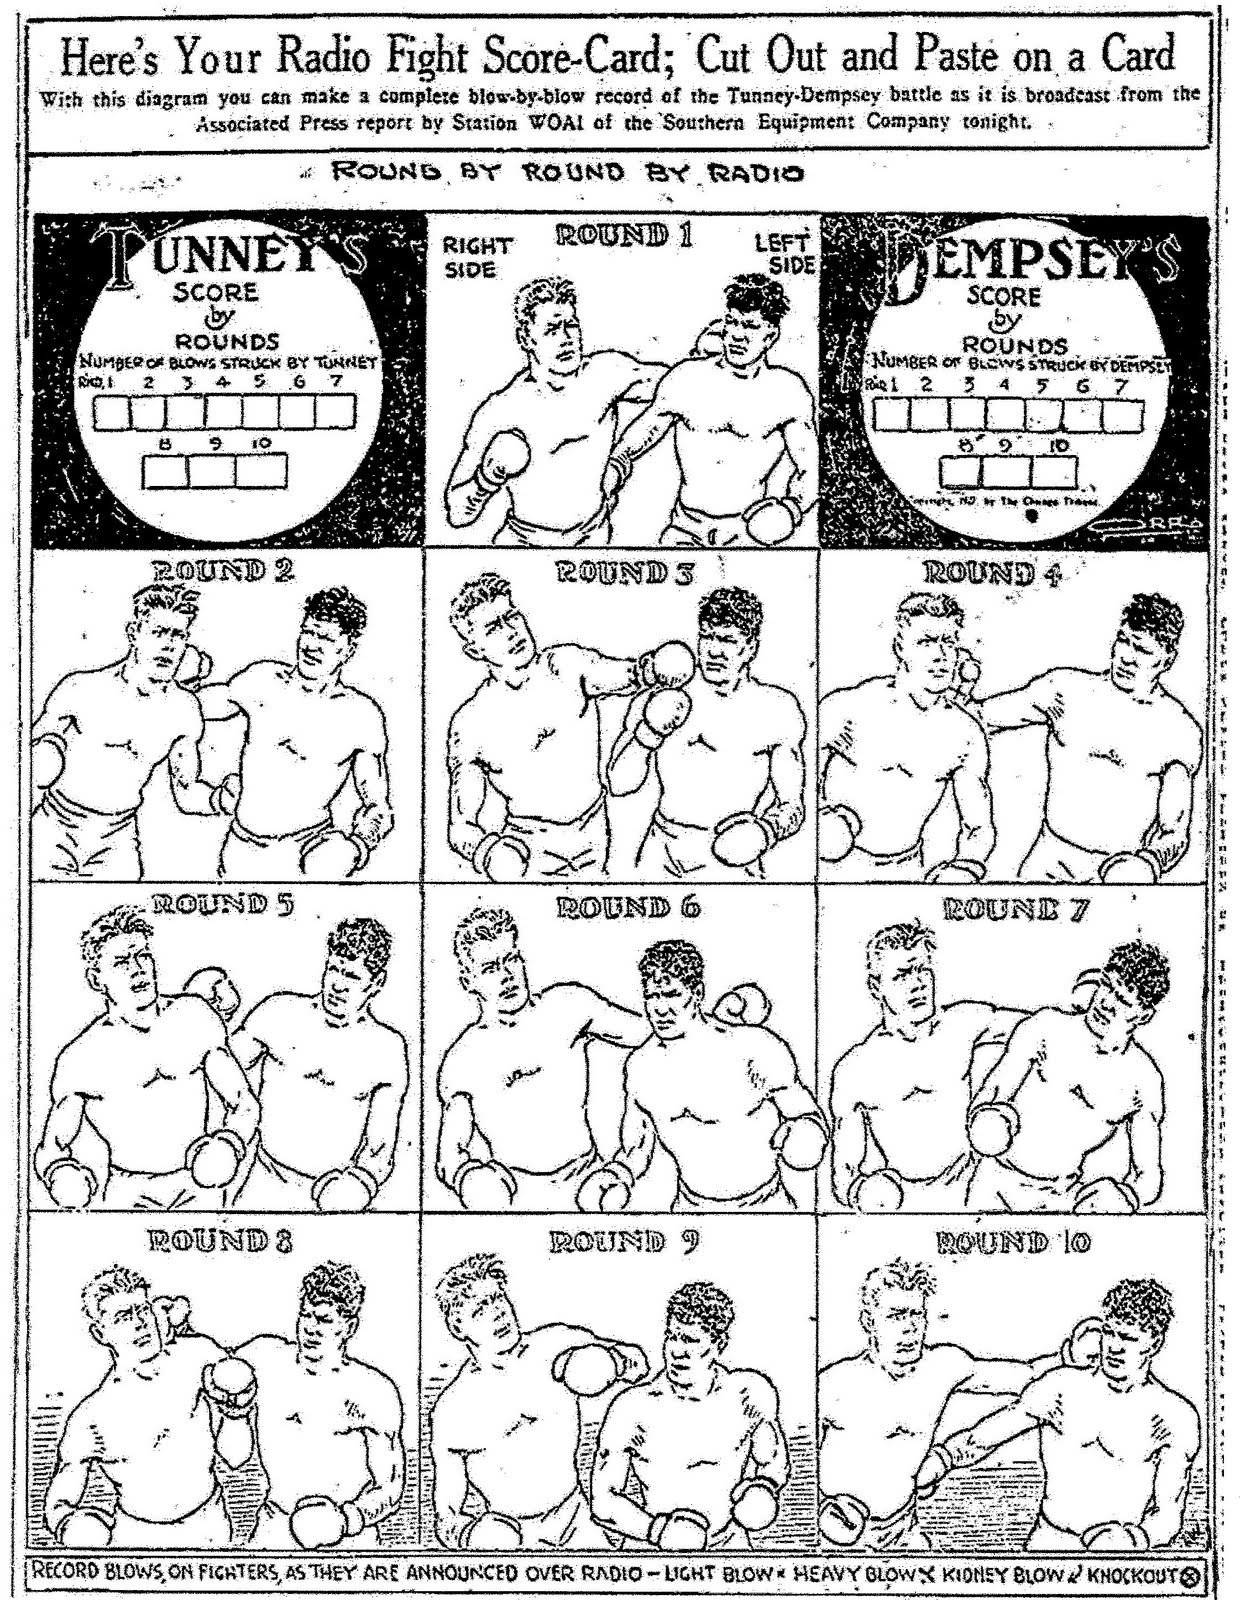 BN Dempsey-Tunney 2 fight scorecard cartoon.